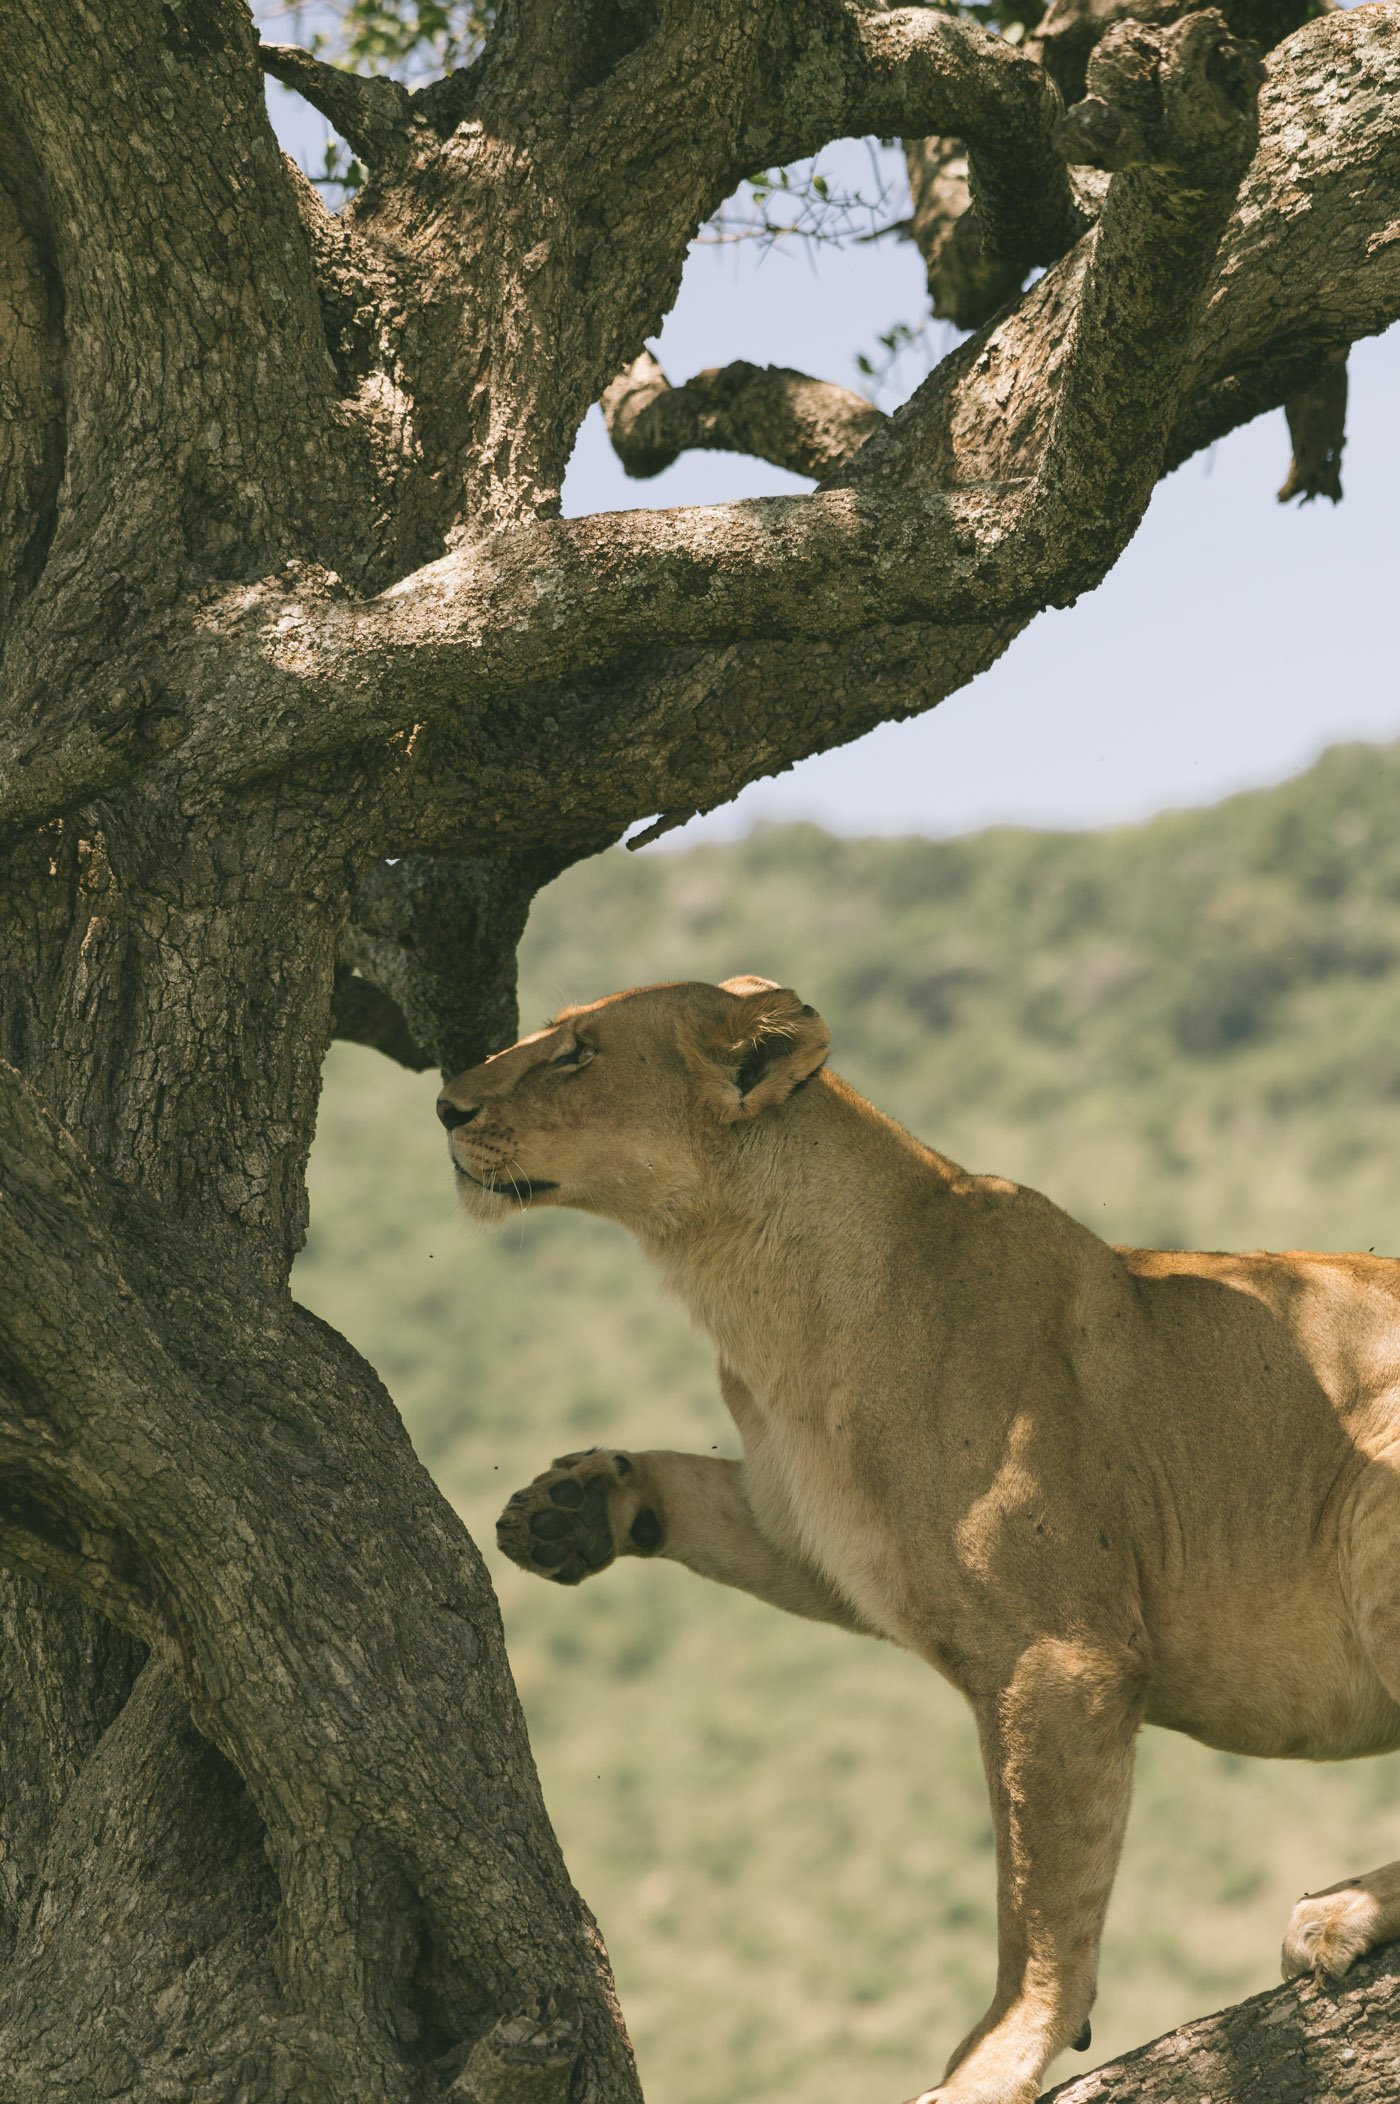 Tree-climbing lions in the Mara Triangle in Kenya